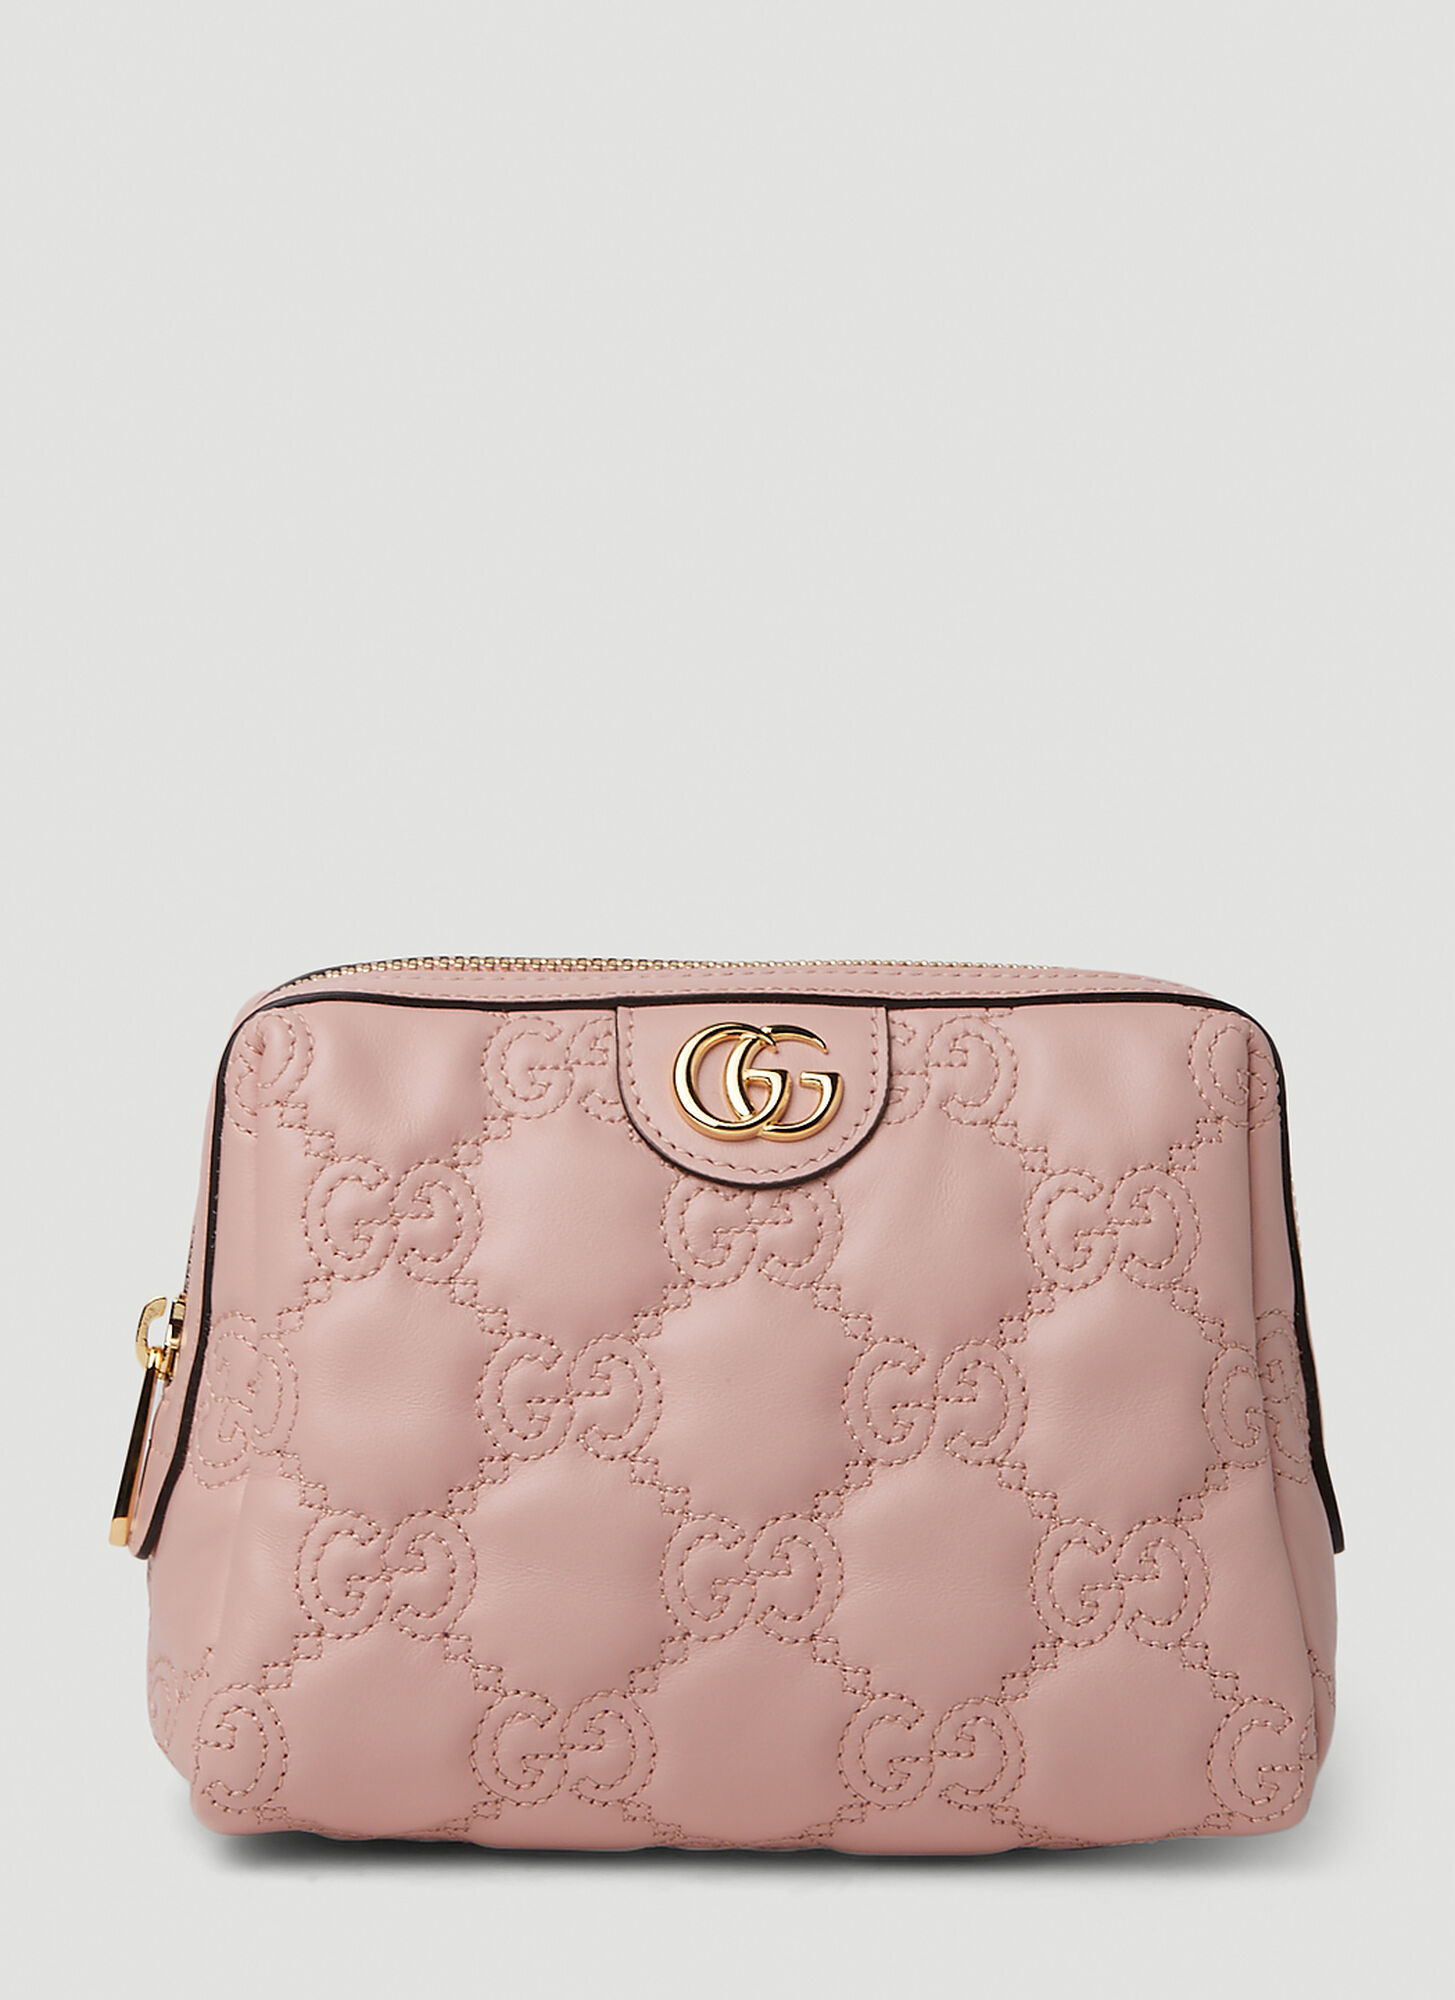 GG Matelassé beauty case in light pink leather